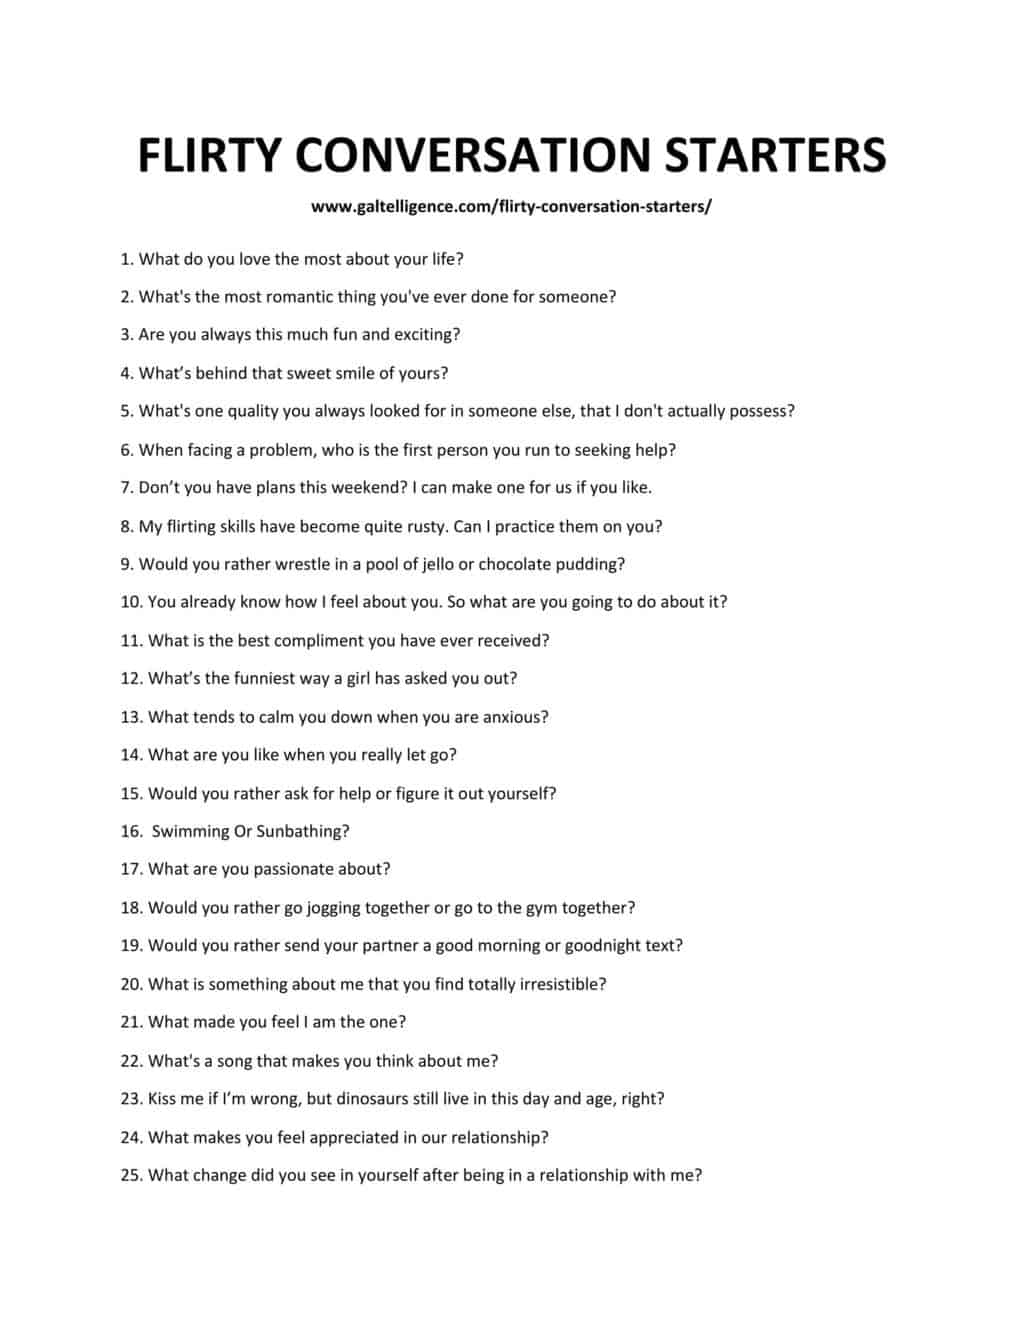 Downloadable list of conversation starters